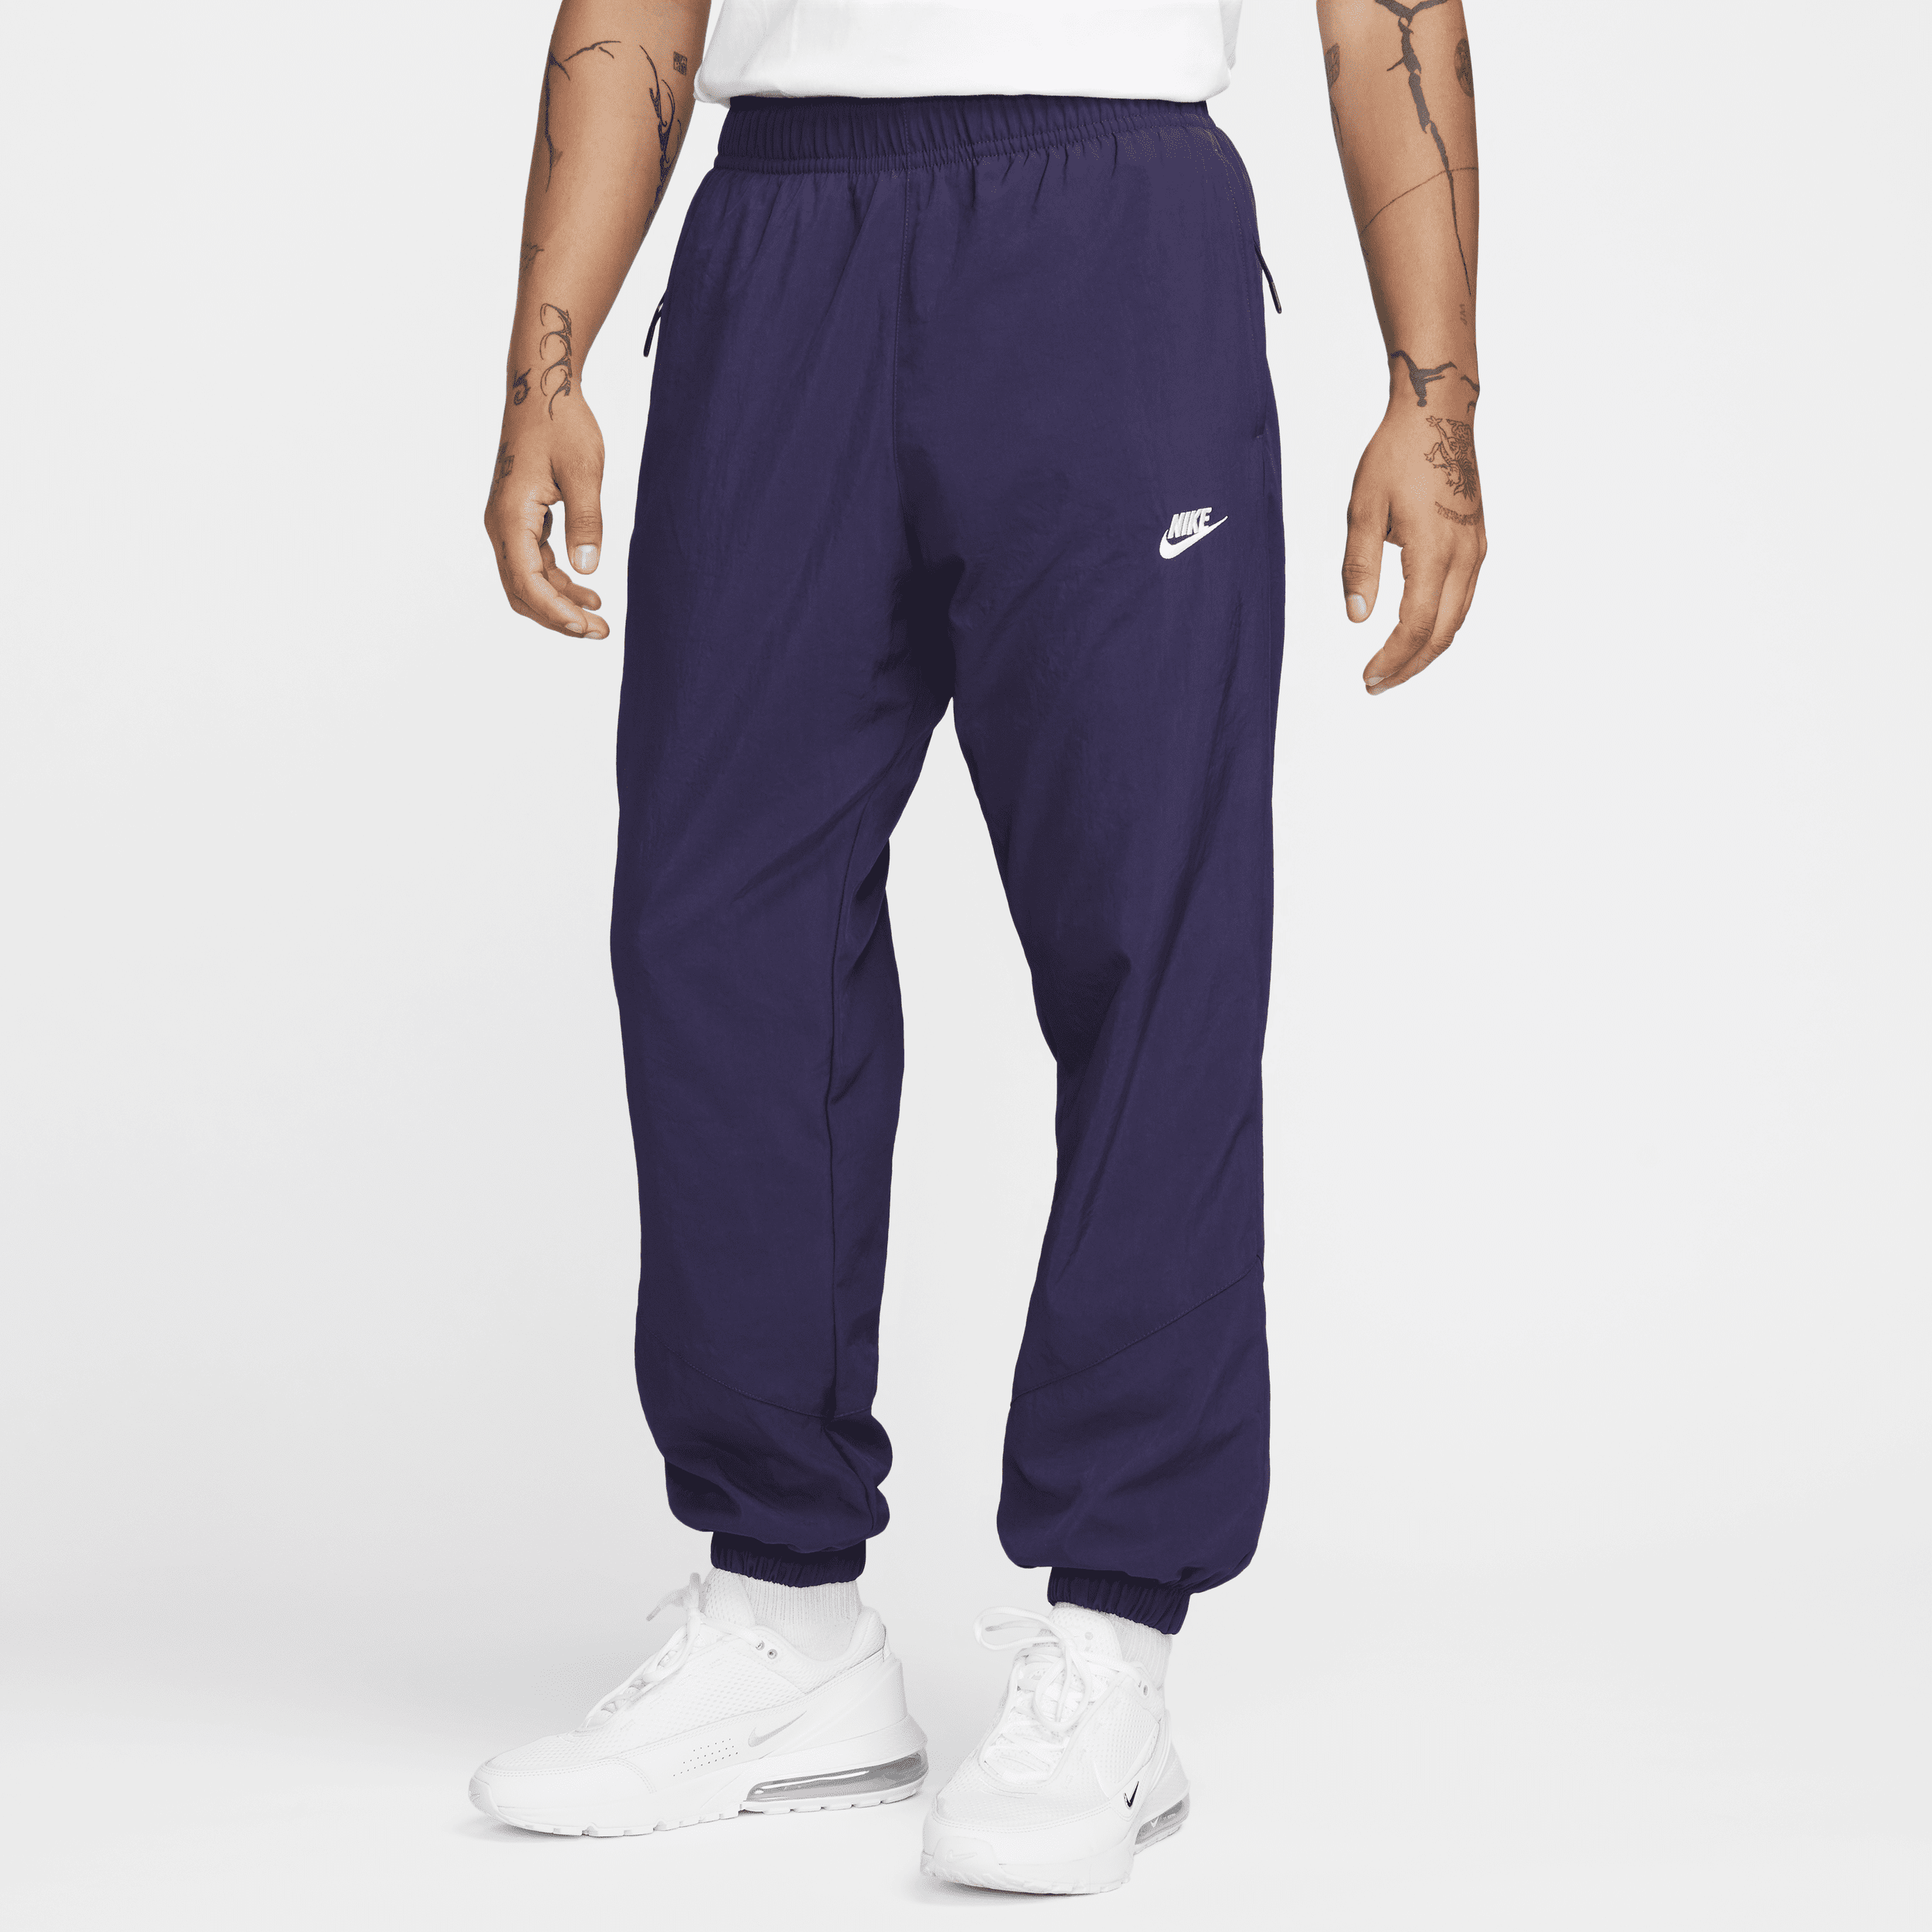 Pantaloni in tessuto per l'inverno Nike Windrunner – Uomo - Viola